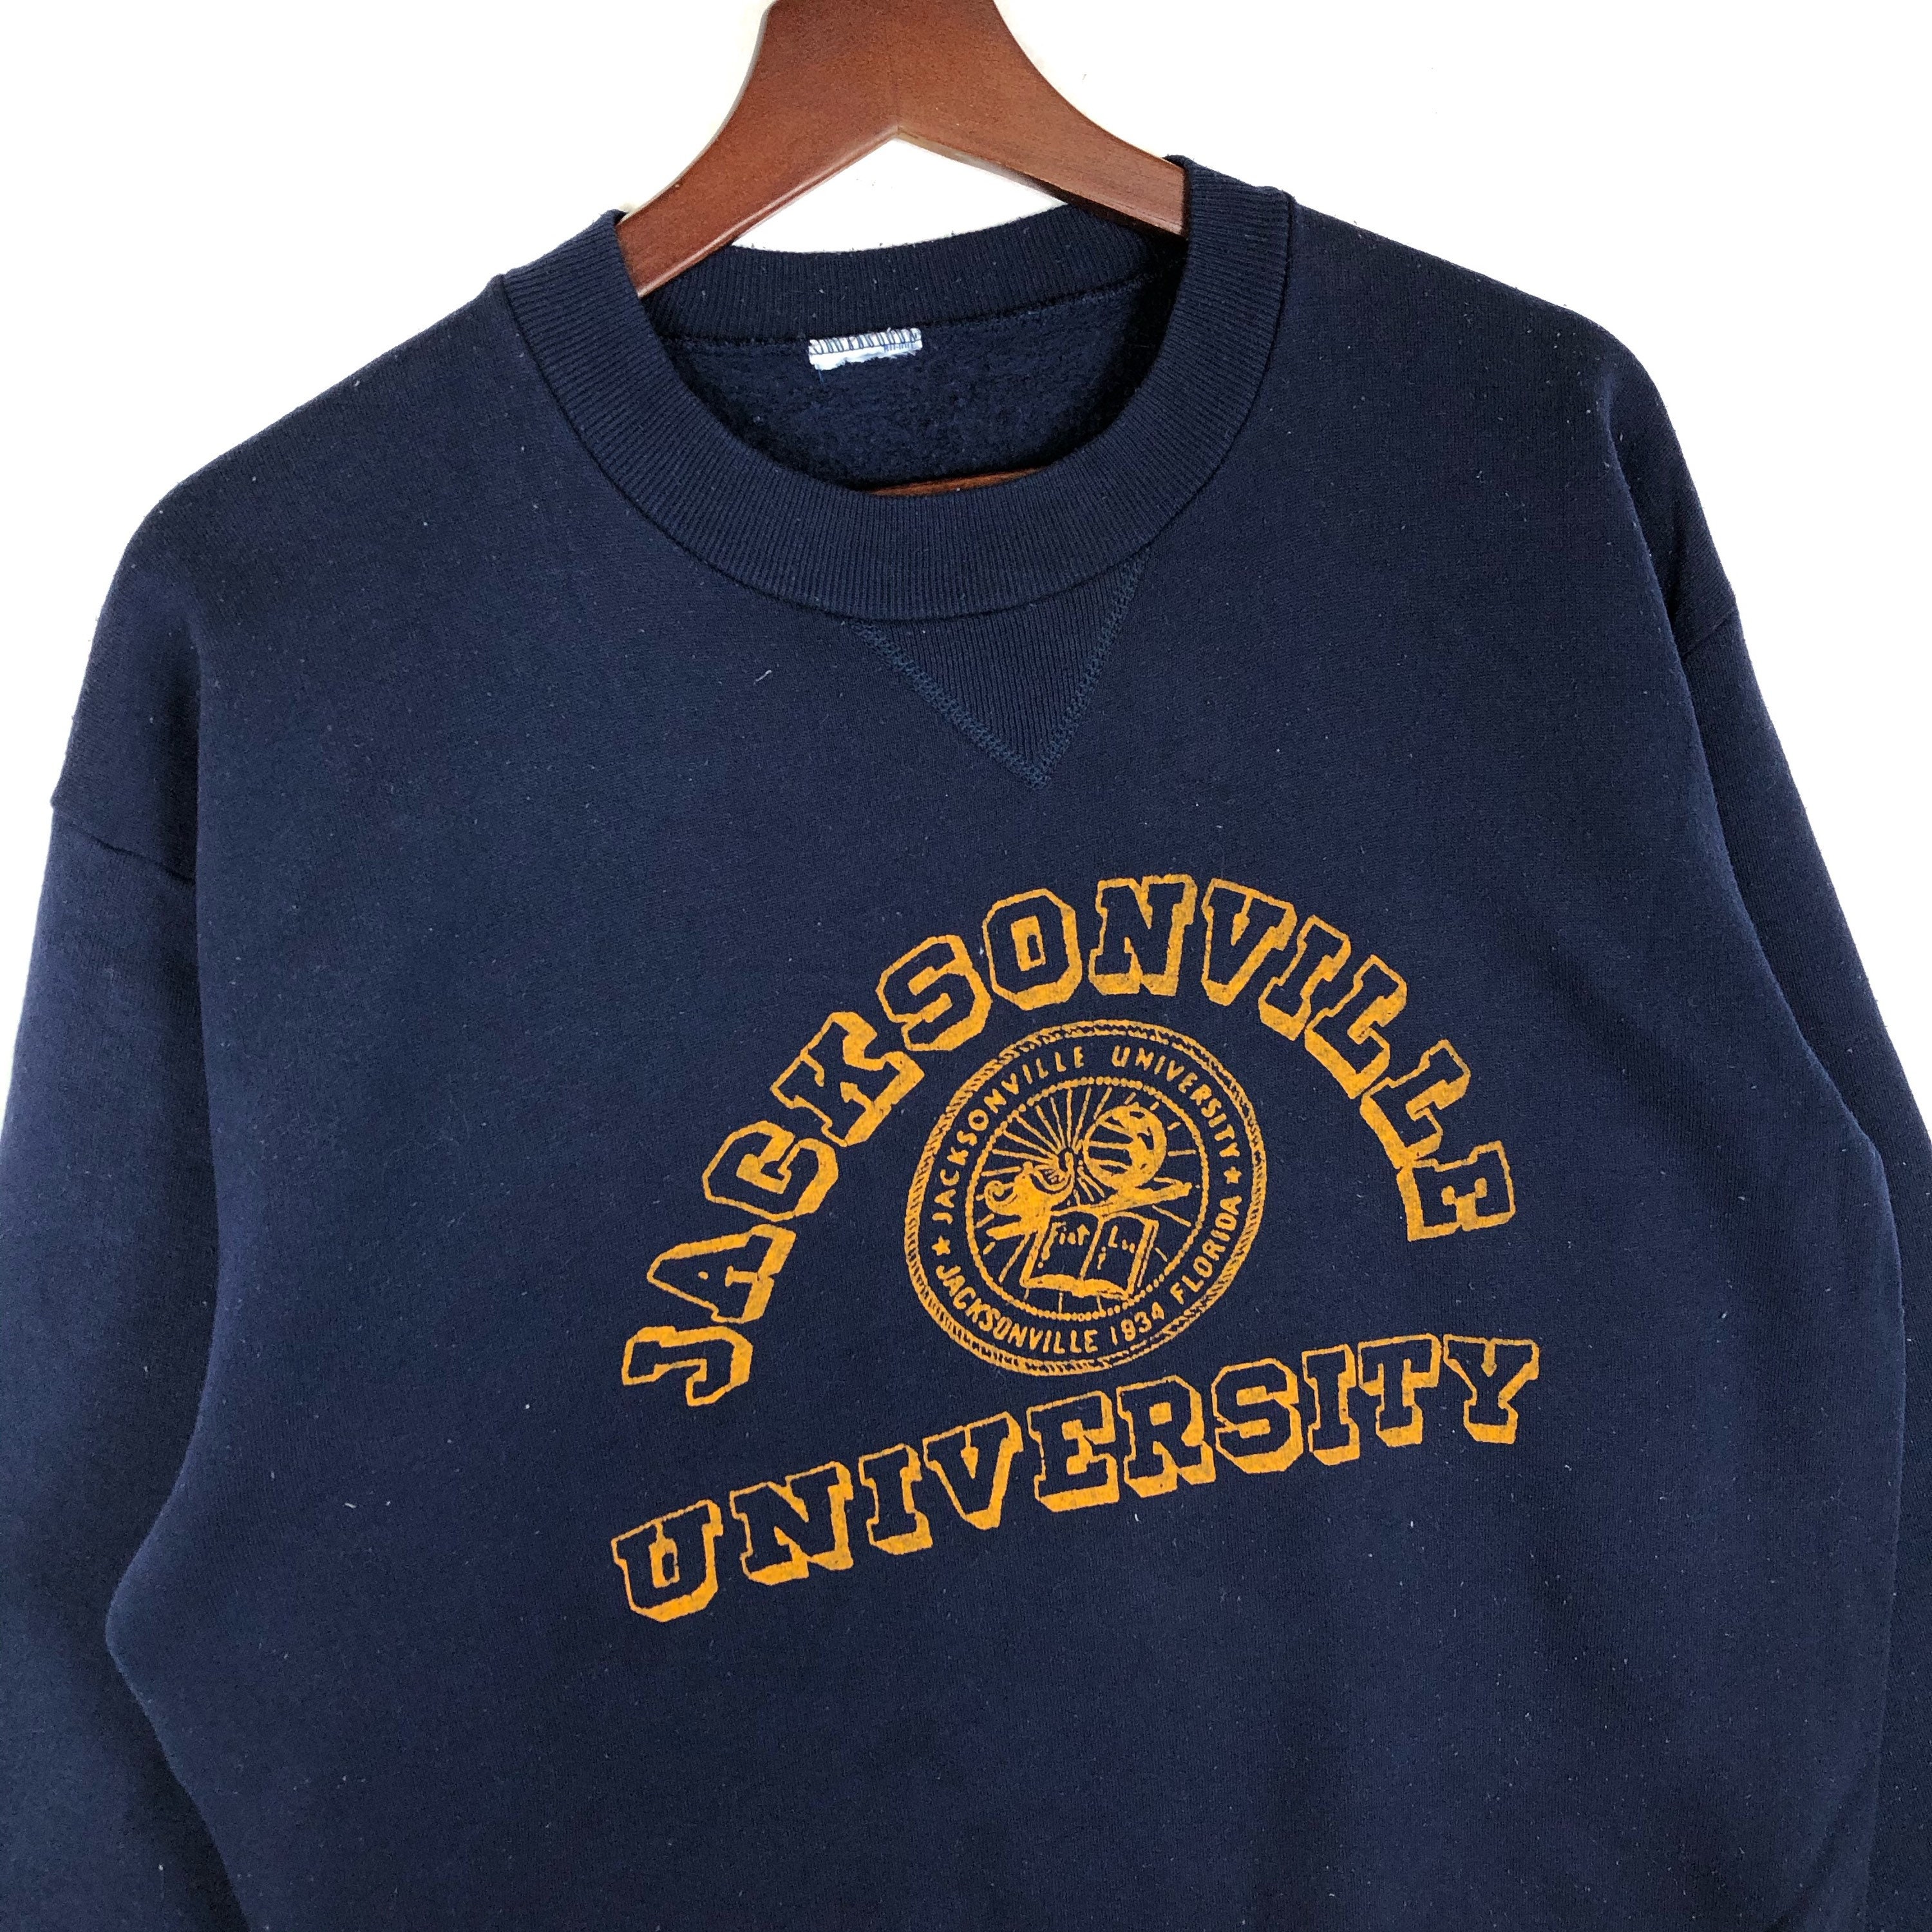 Vintage 80s Jacksonville University Sweatshirt Crewneck - Etsy